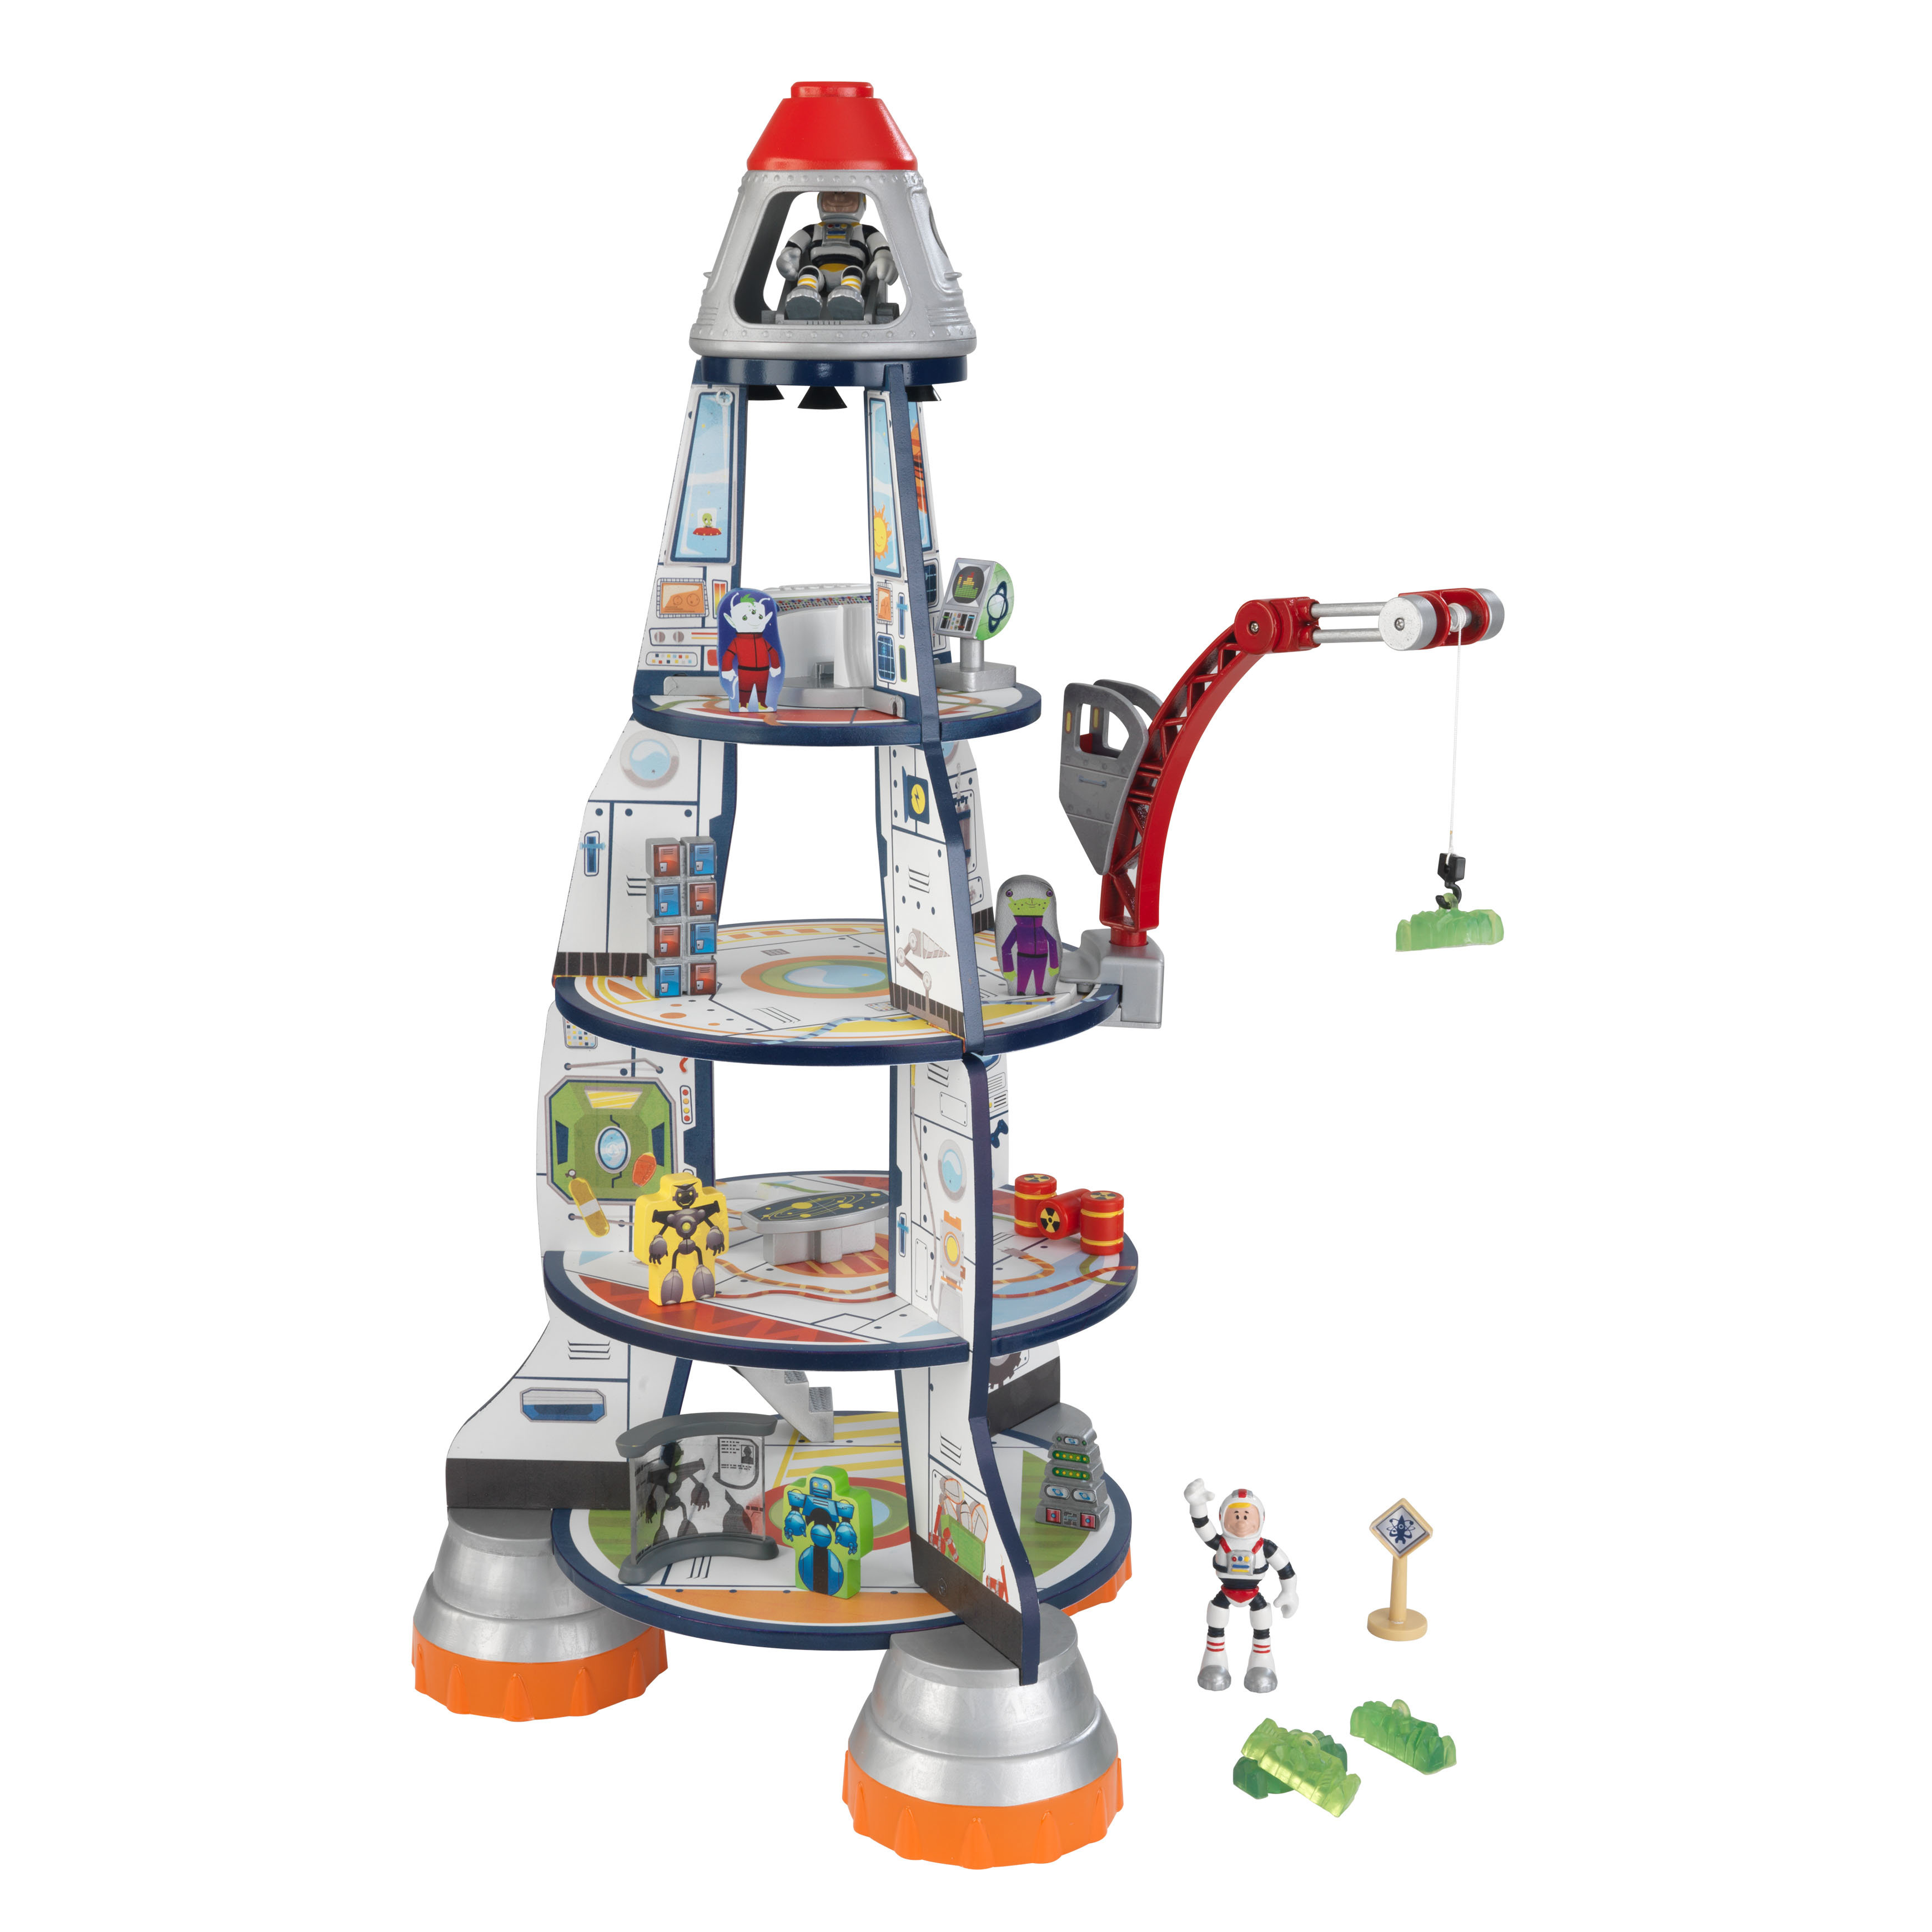 Raketa Kidkraft Rocket Ship Play Set 63443